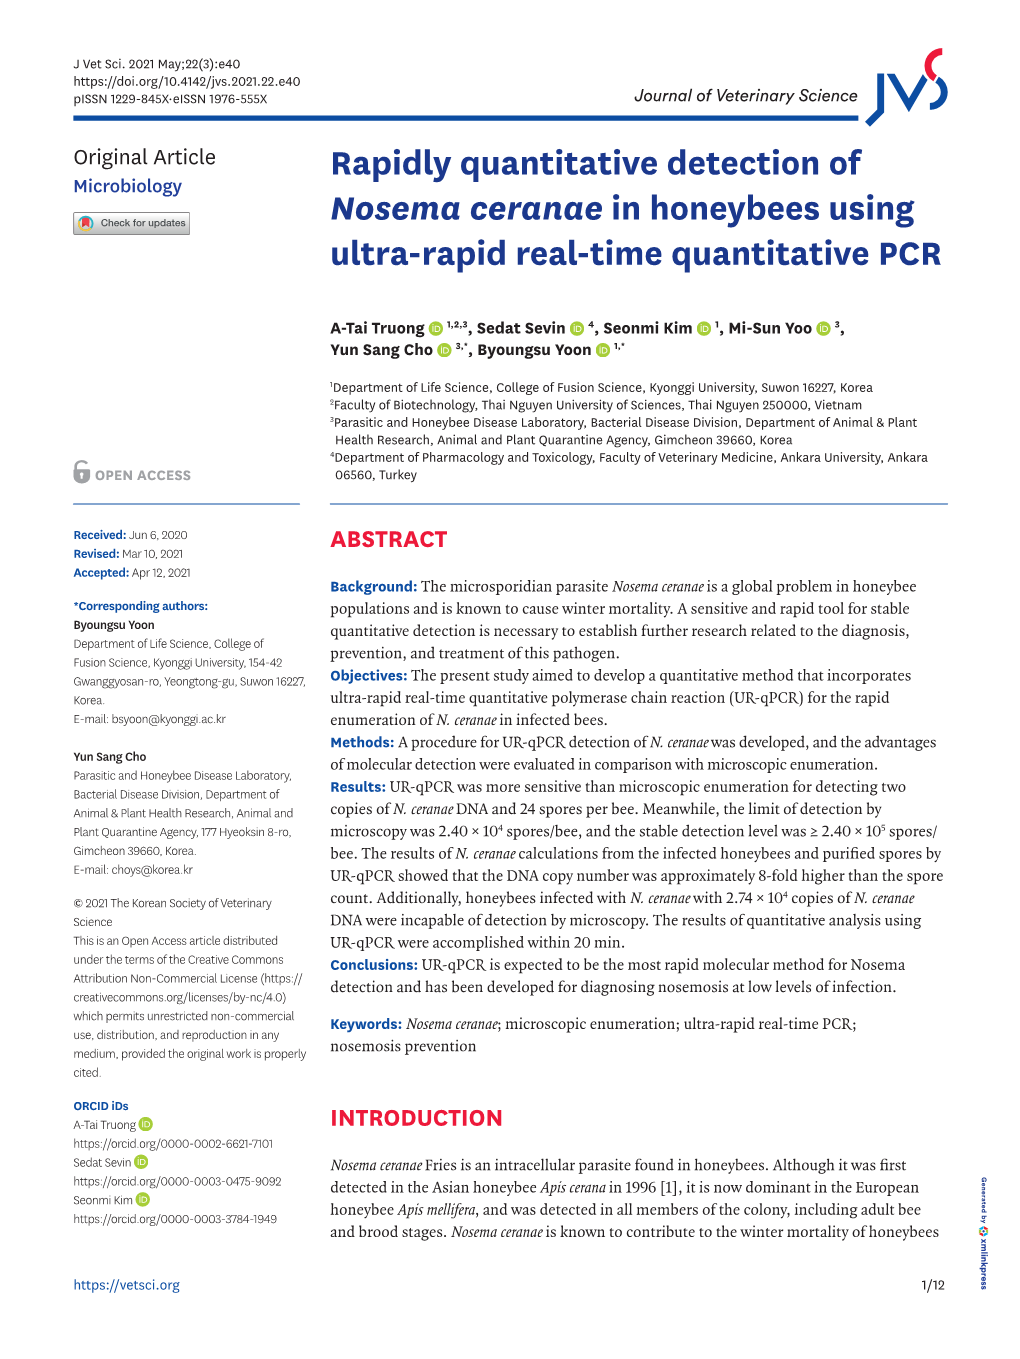 Rapidly Quantitative Detection of Nosema Ceranae in Honeybees Using Ultra-Rapid Real-Time Quantitative